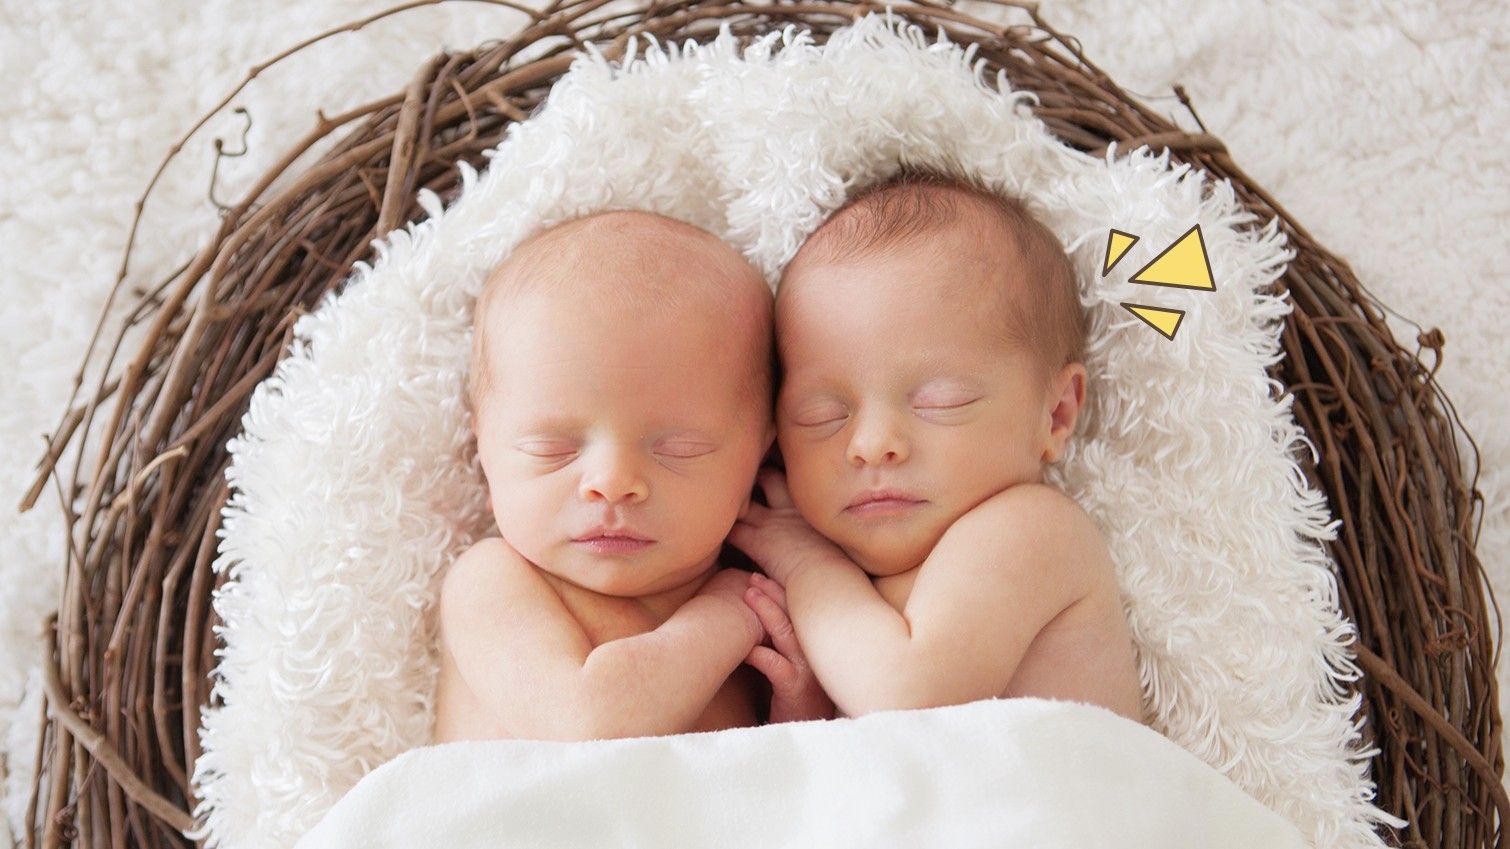 Mengenal Twin to Twin Transfusion Syndrome (TTTS), Salah Satu Risiko Komplikasi pada Kehamilan Kembar